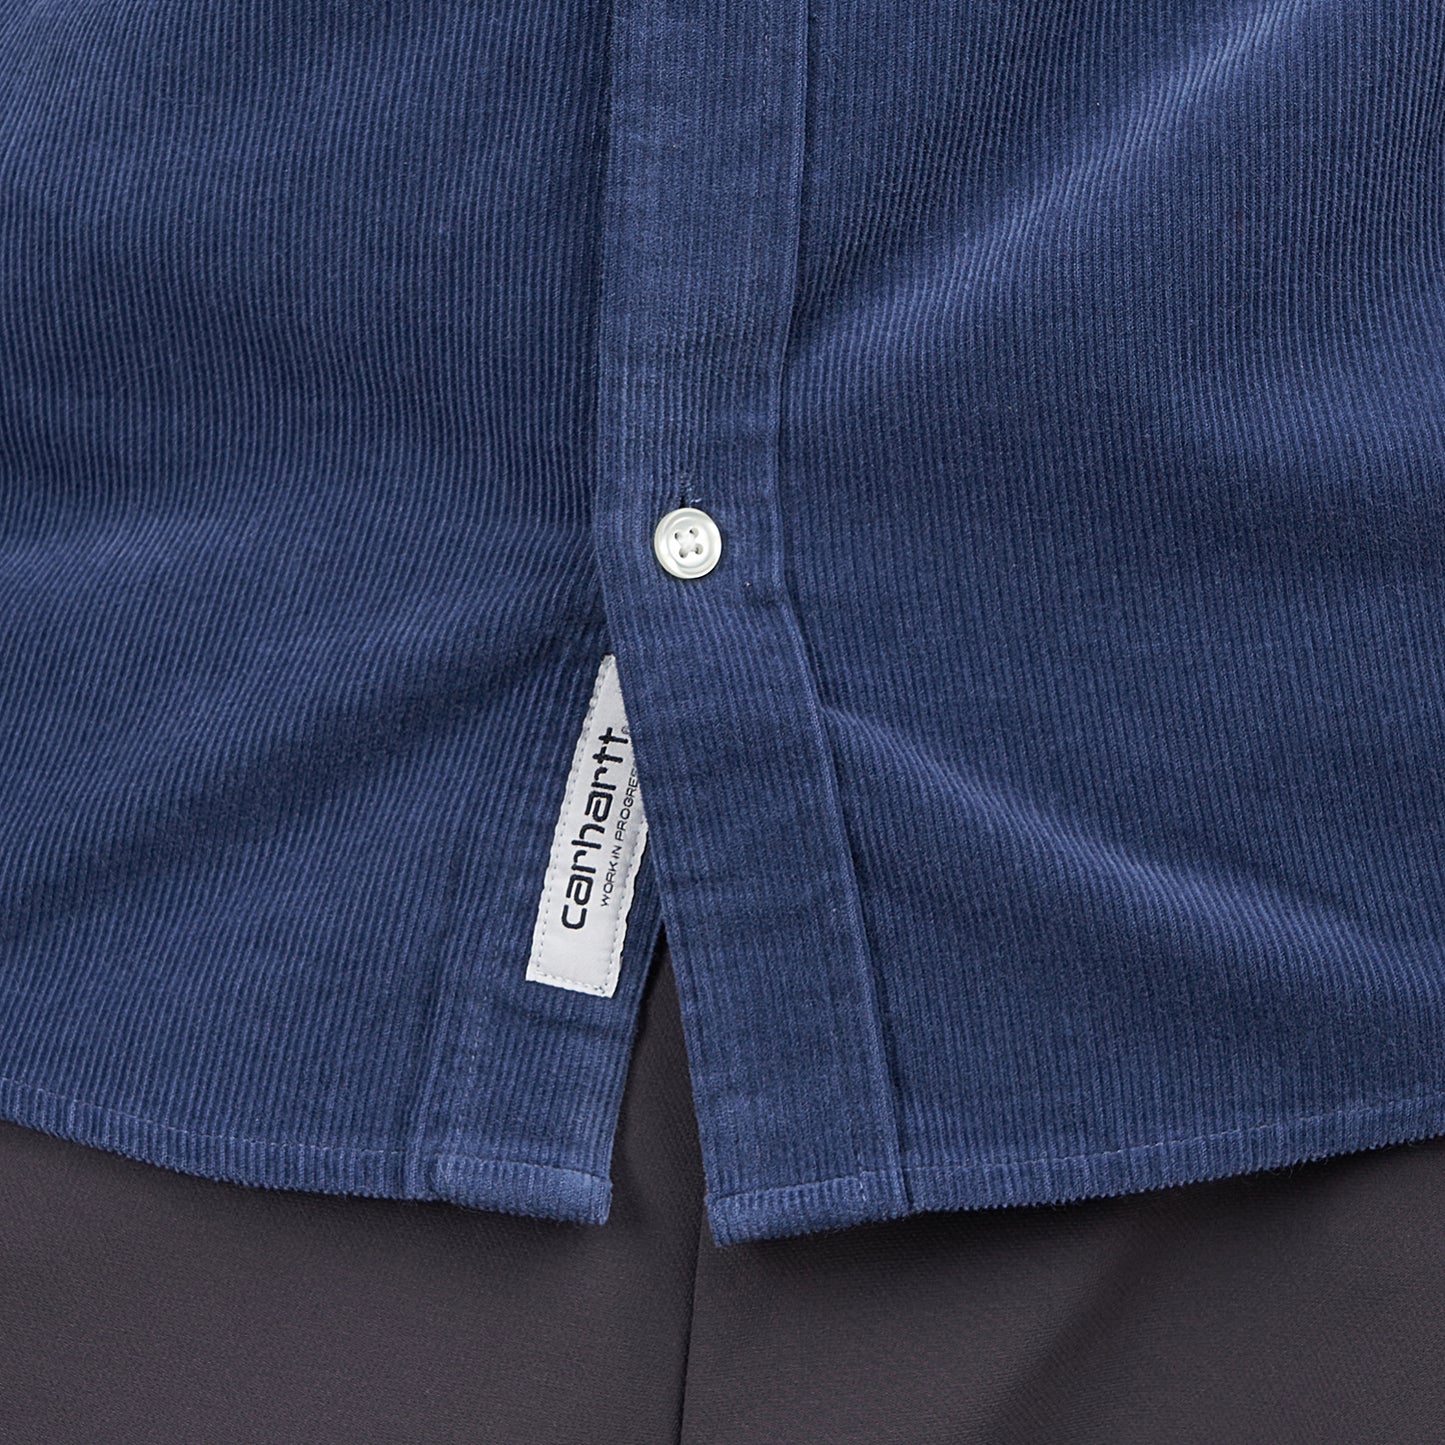 Carhartt WIP L/S Madison Fine Cord Shirt (Blau)  - Cheap Juzsports Jordan Outlet